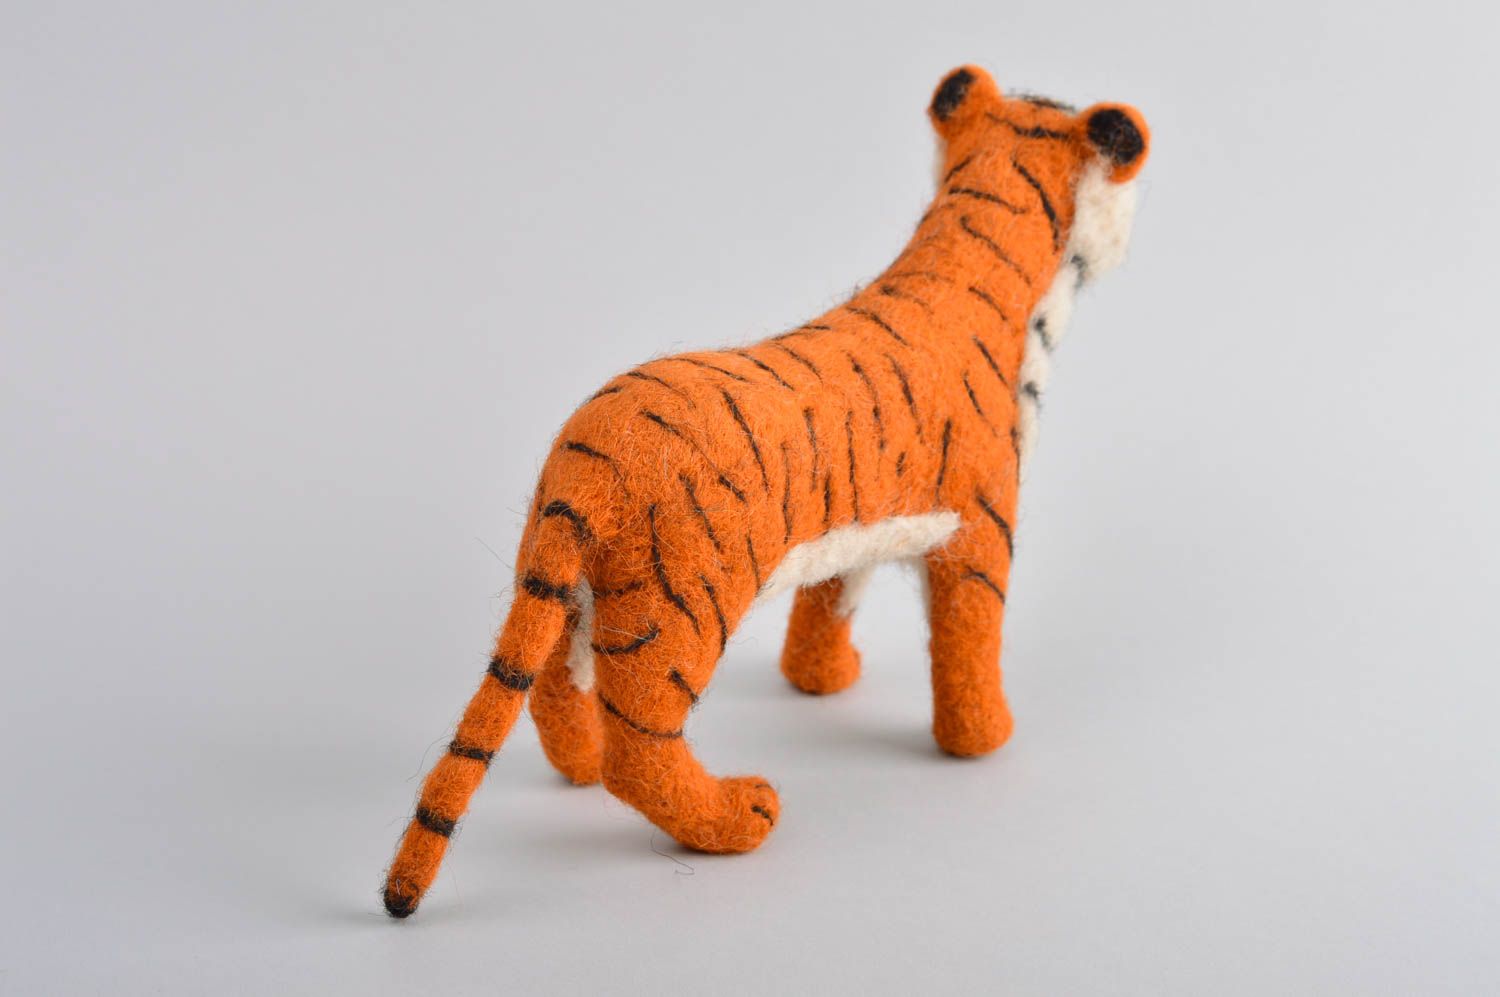 Handmade toy designer toy woolen animal toy for kids nursery decor gift ideas photo 4